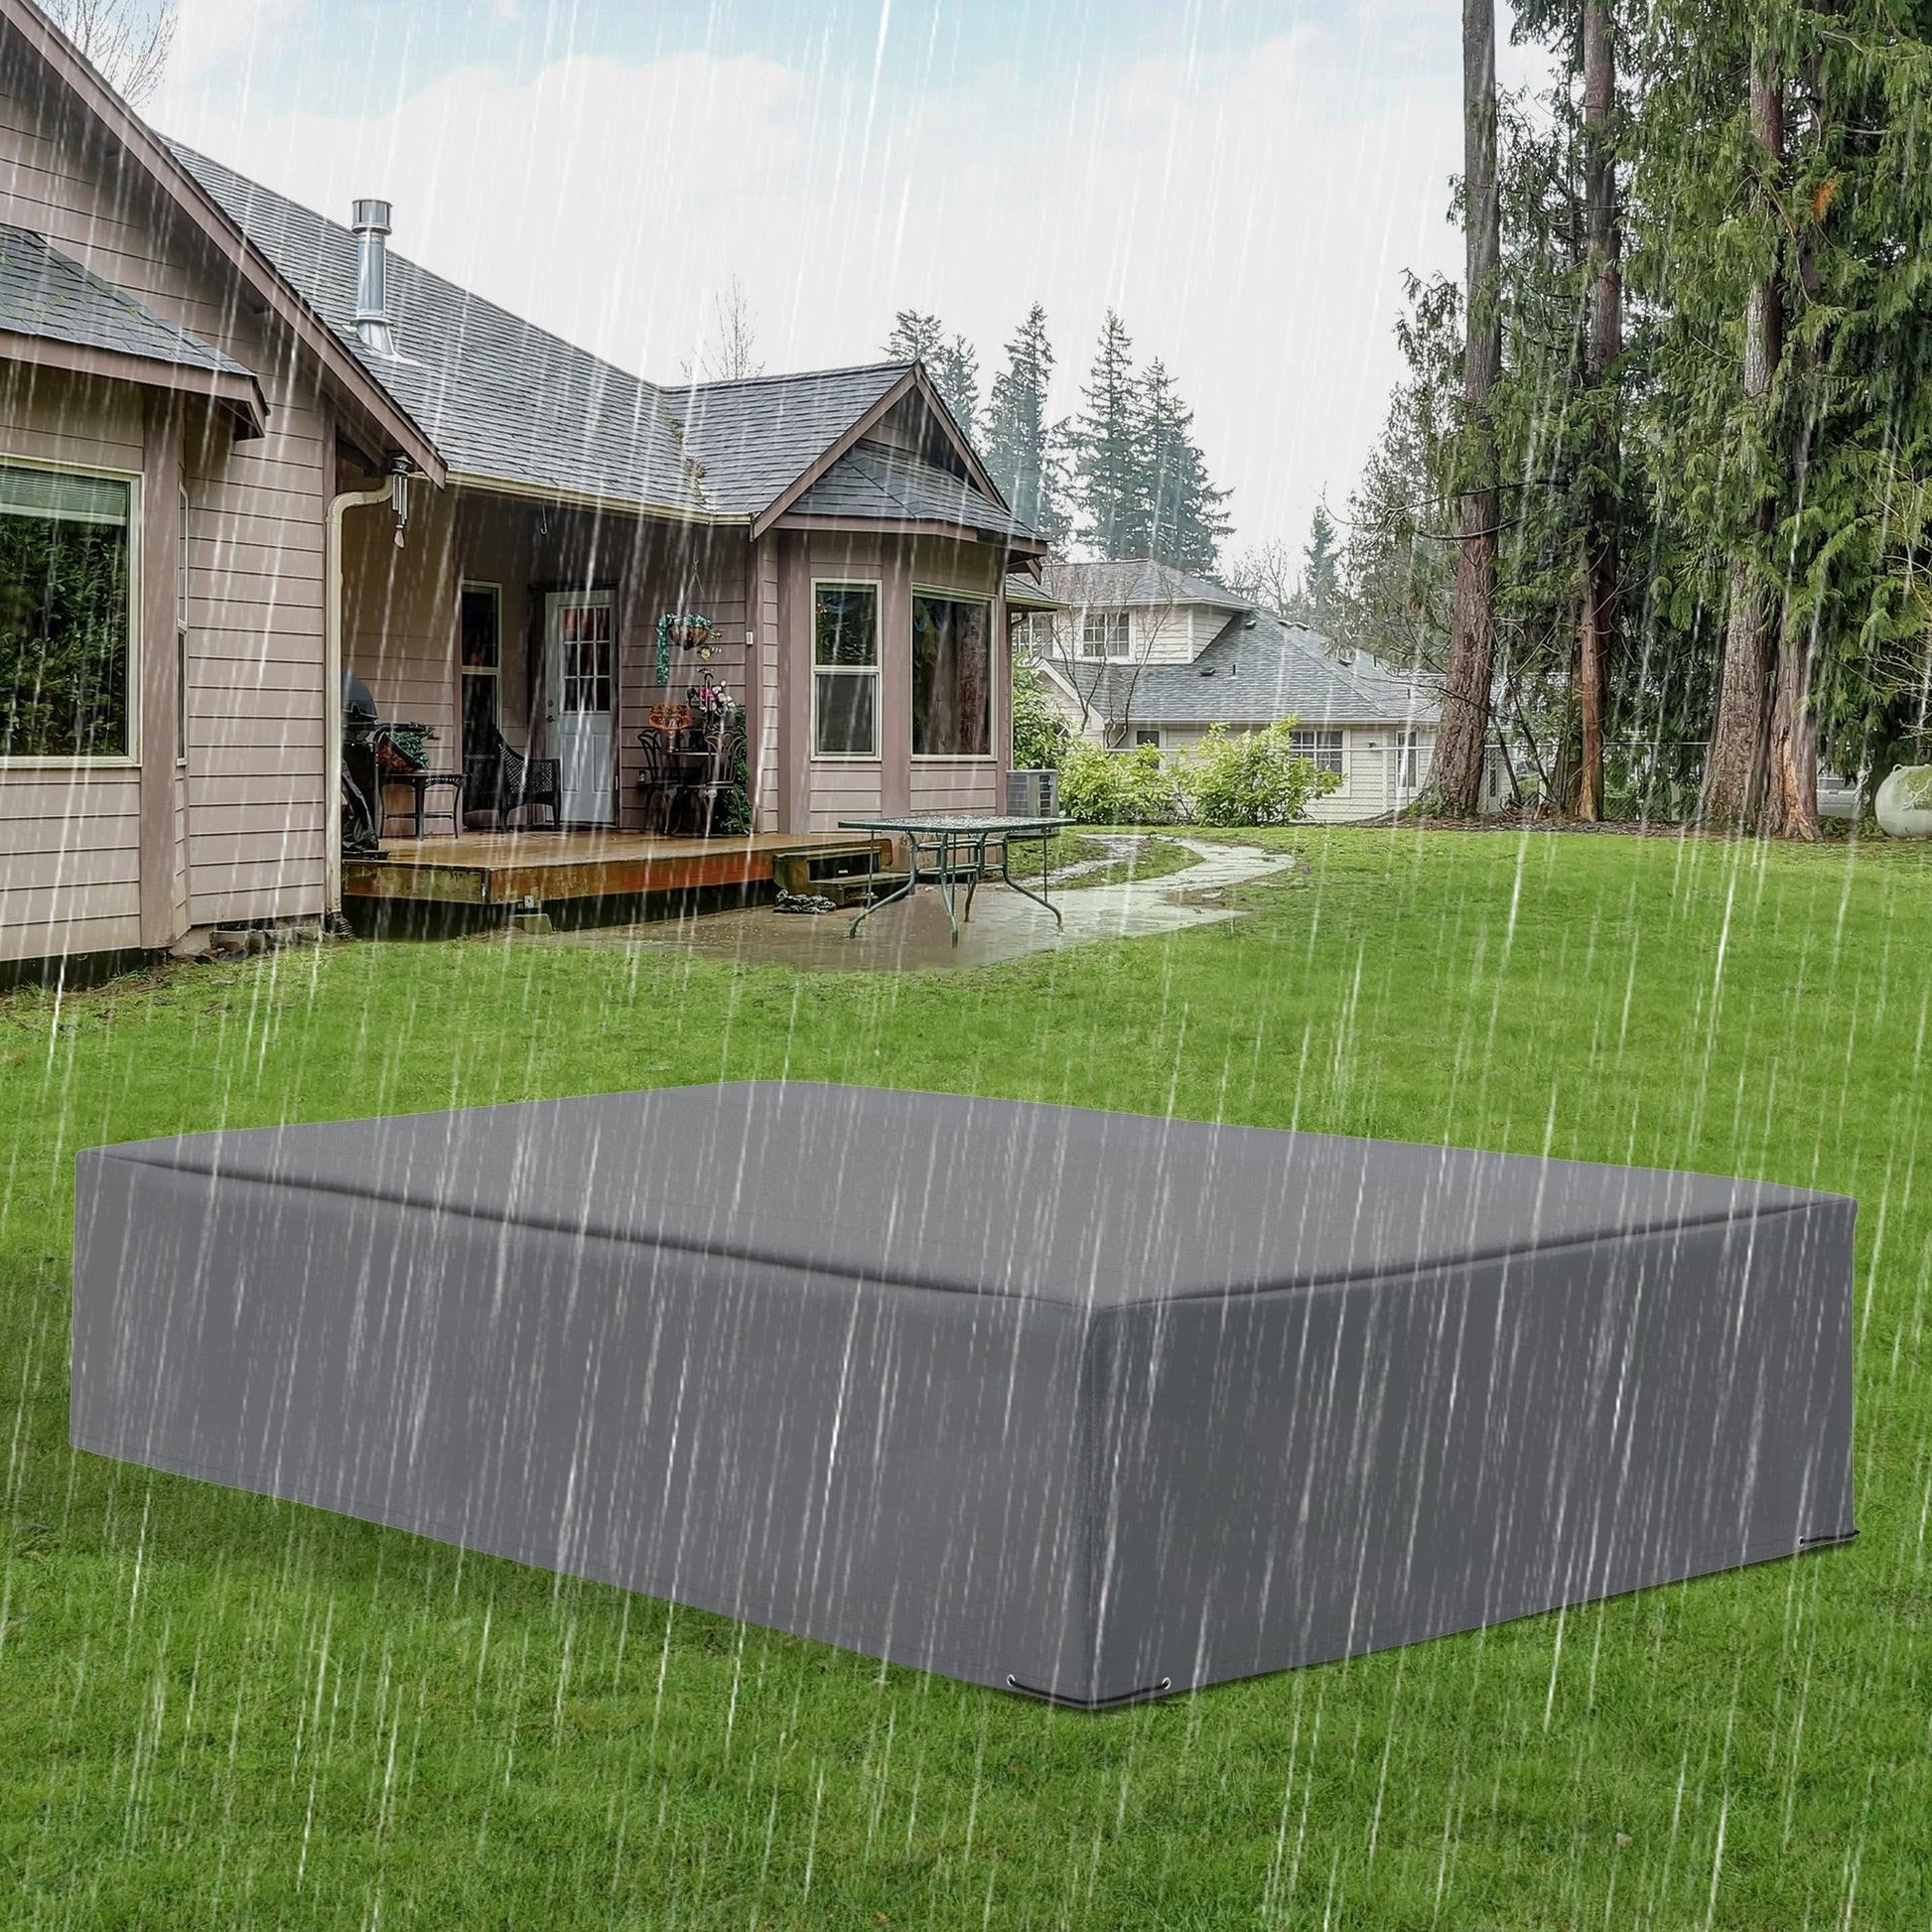 Outsunny Outdoor Rattan Furniture Cover - Waterproof & UV Resistant - ALL4U RETAILER LTD